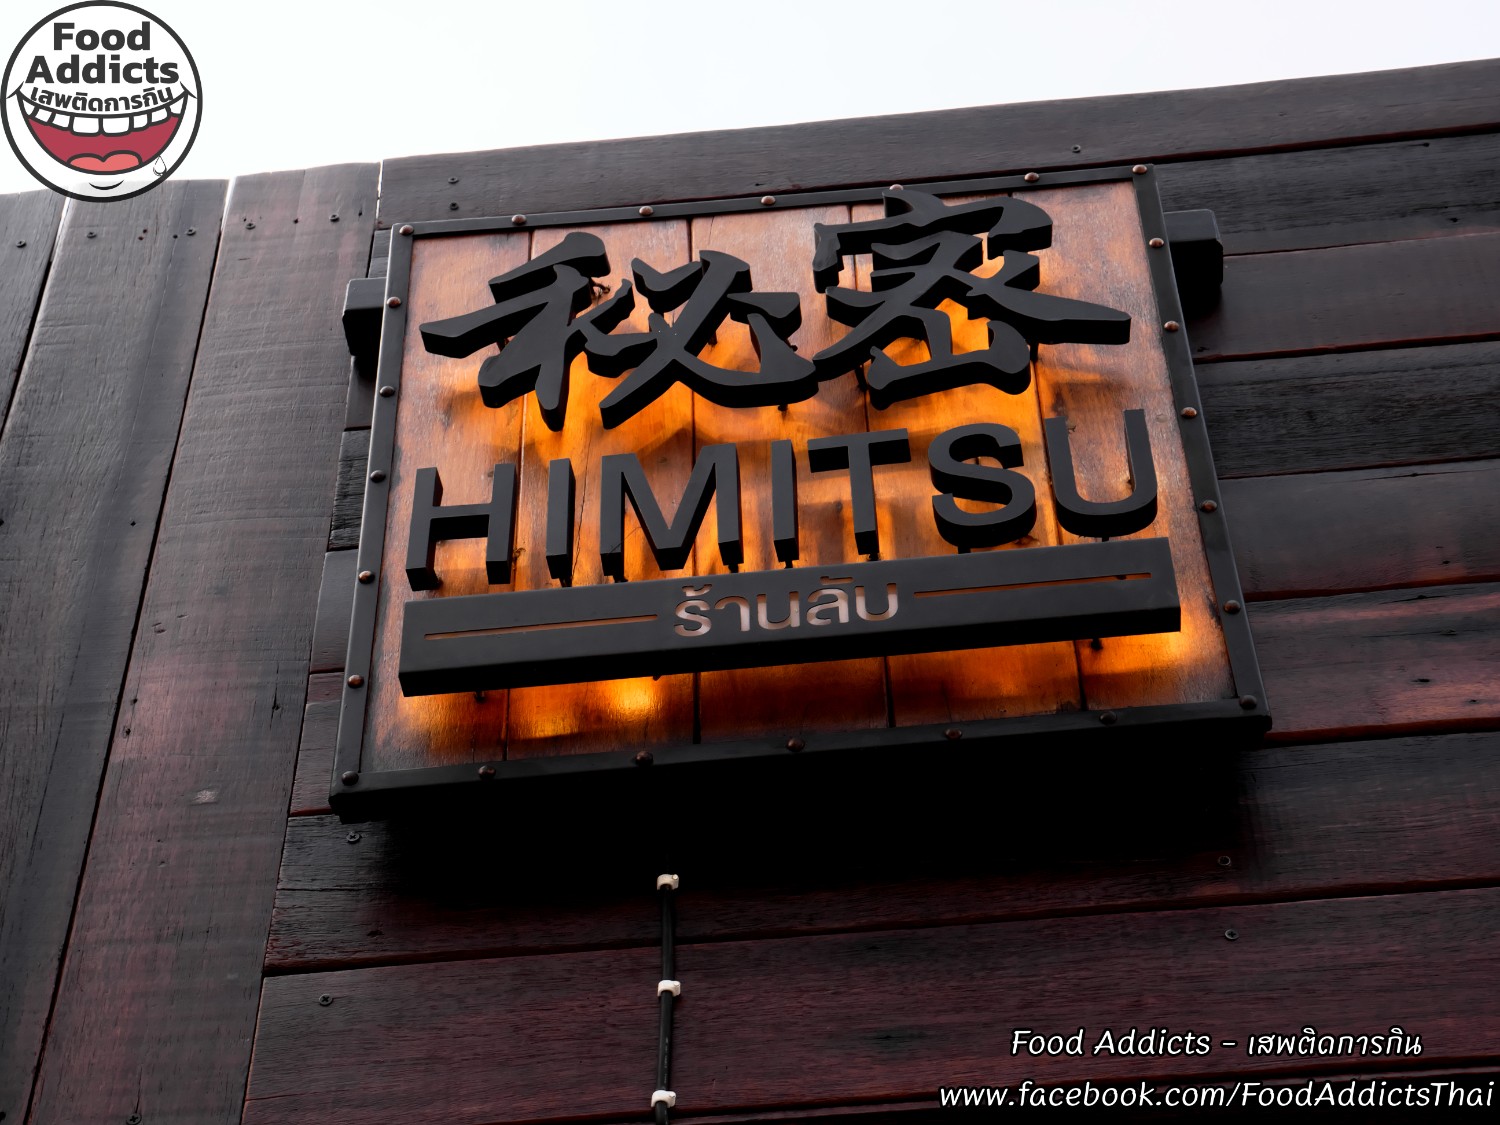 [CR] รีวิว “Himitsu” ร้านอาหารญี่ปุ่นเสิร์ฟดงบุริและซาชิมิปลาไทยสดใหม่ในราคาสมเหตุผล ใกล้ BTS โพธิ์นิมิตร pantip